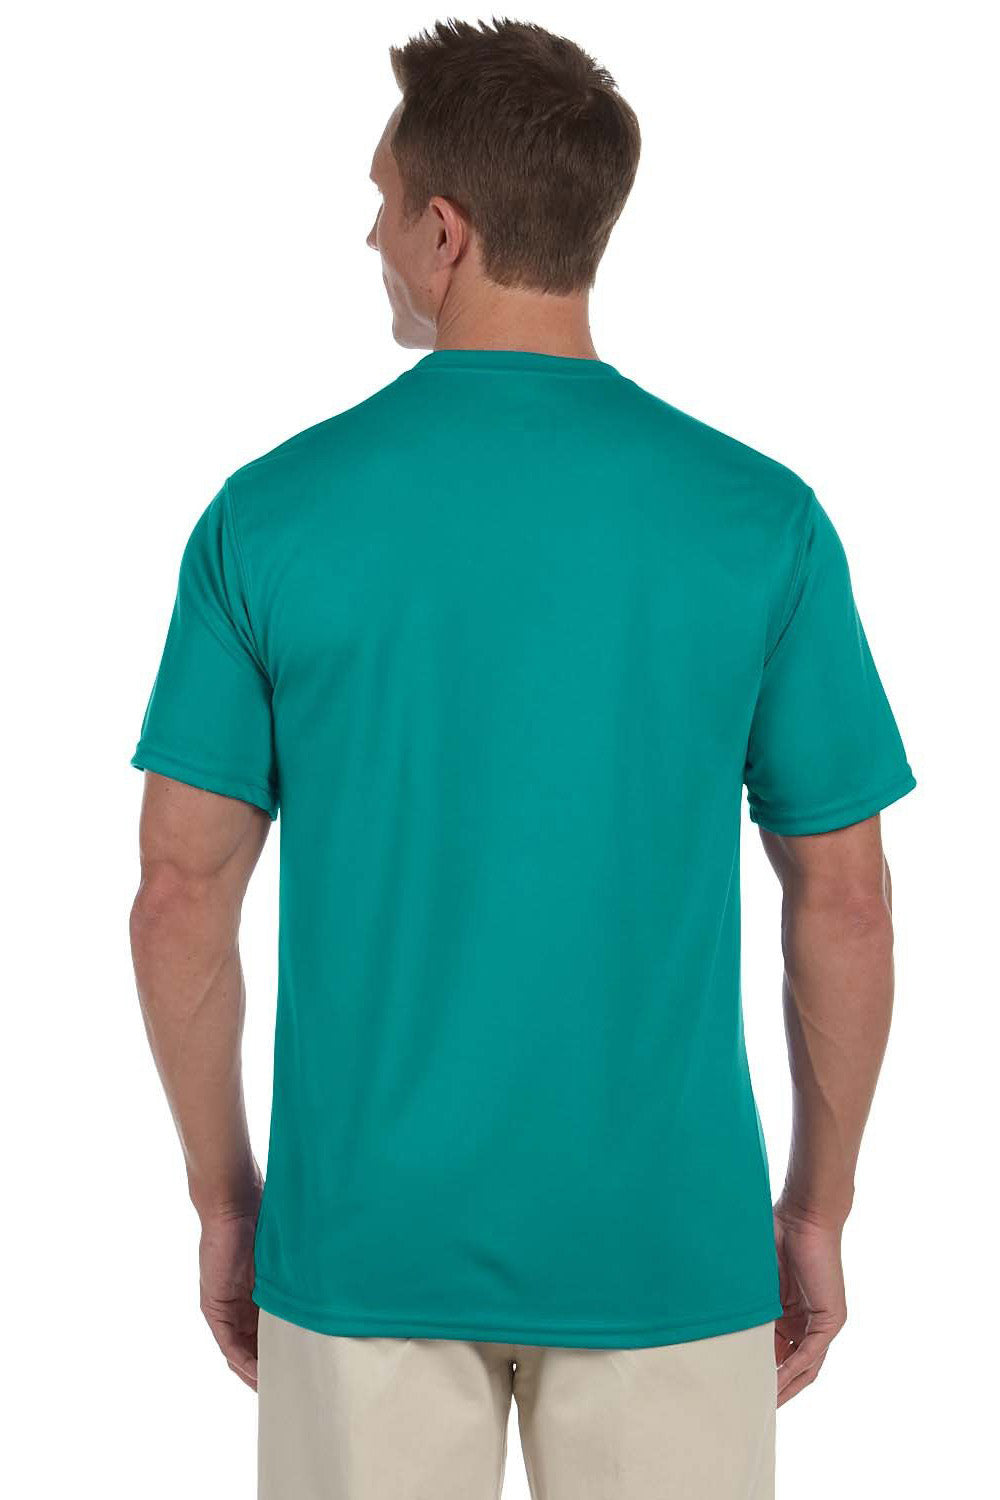 Augusta Sportswear 790 Mens Moisture Wicking Short Sleeve Crewneck T-Shirt Teal Green Model Back